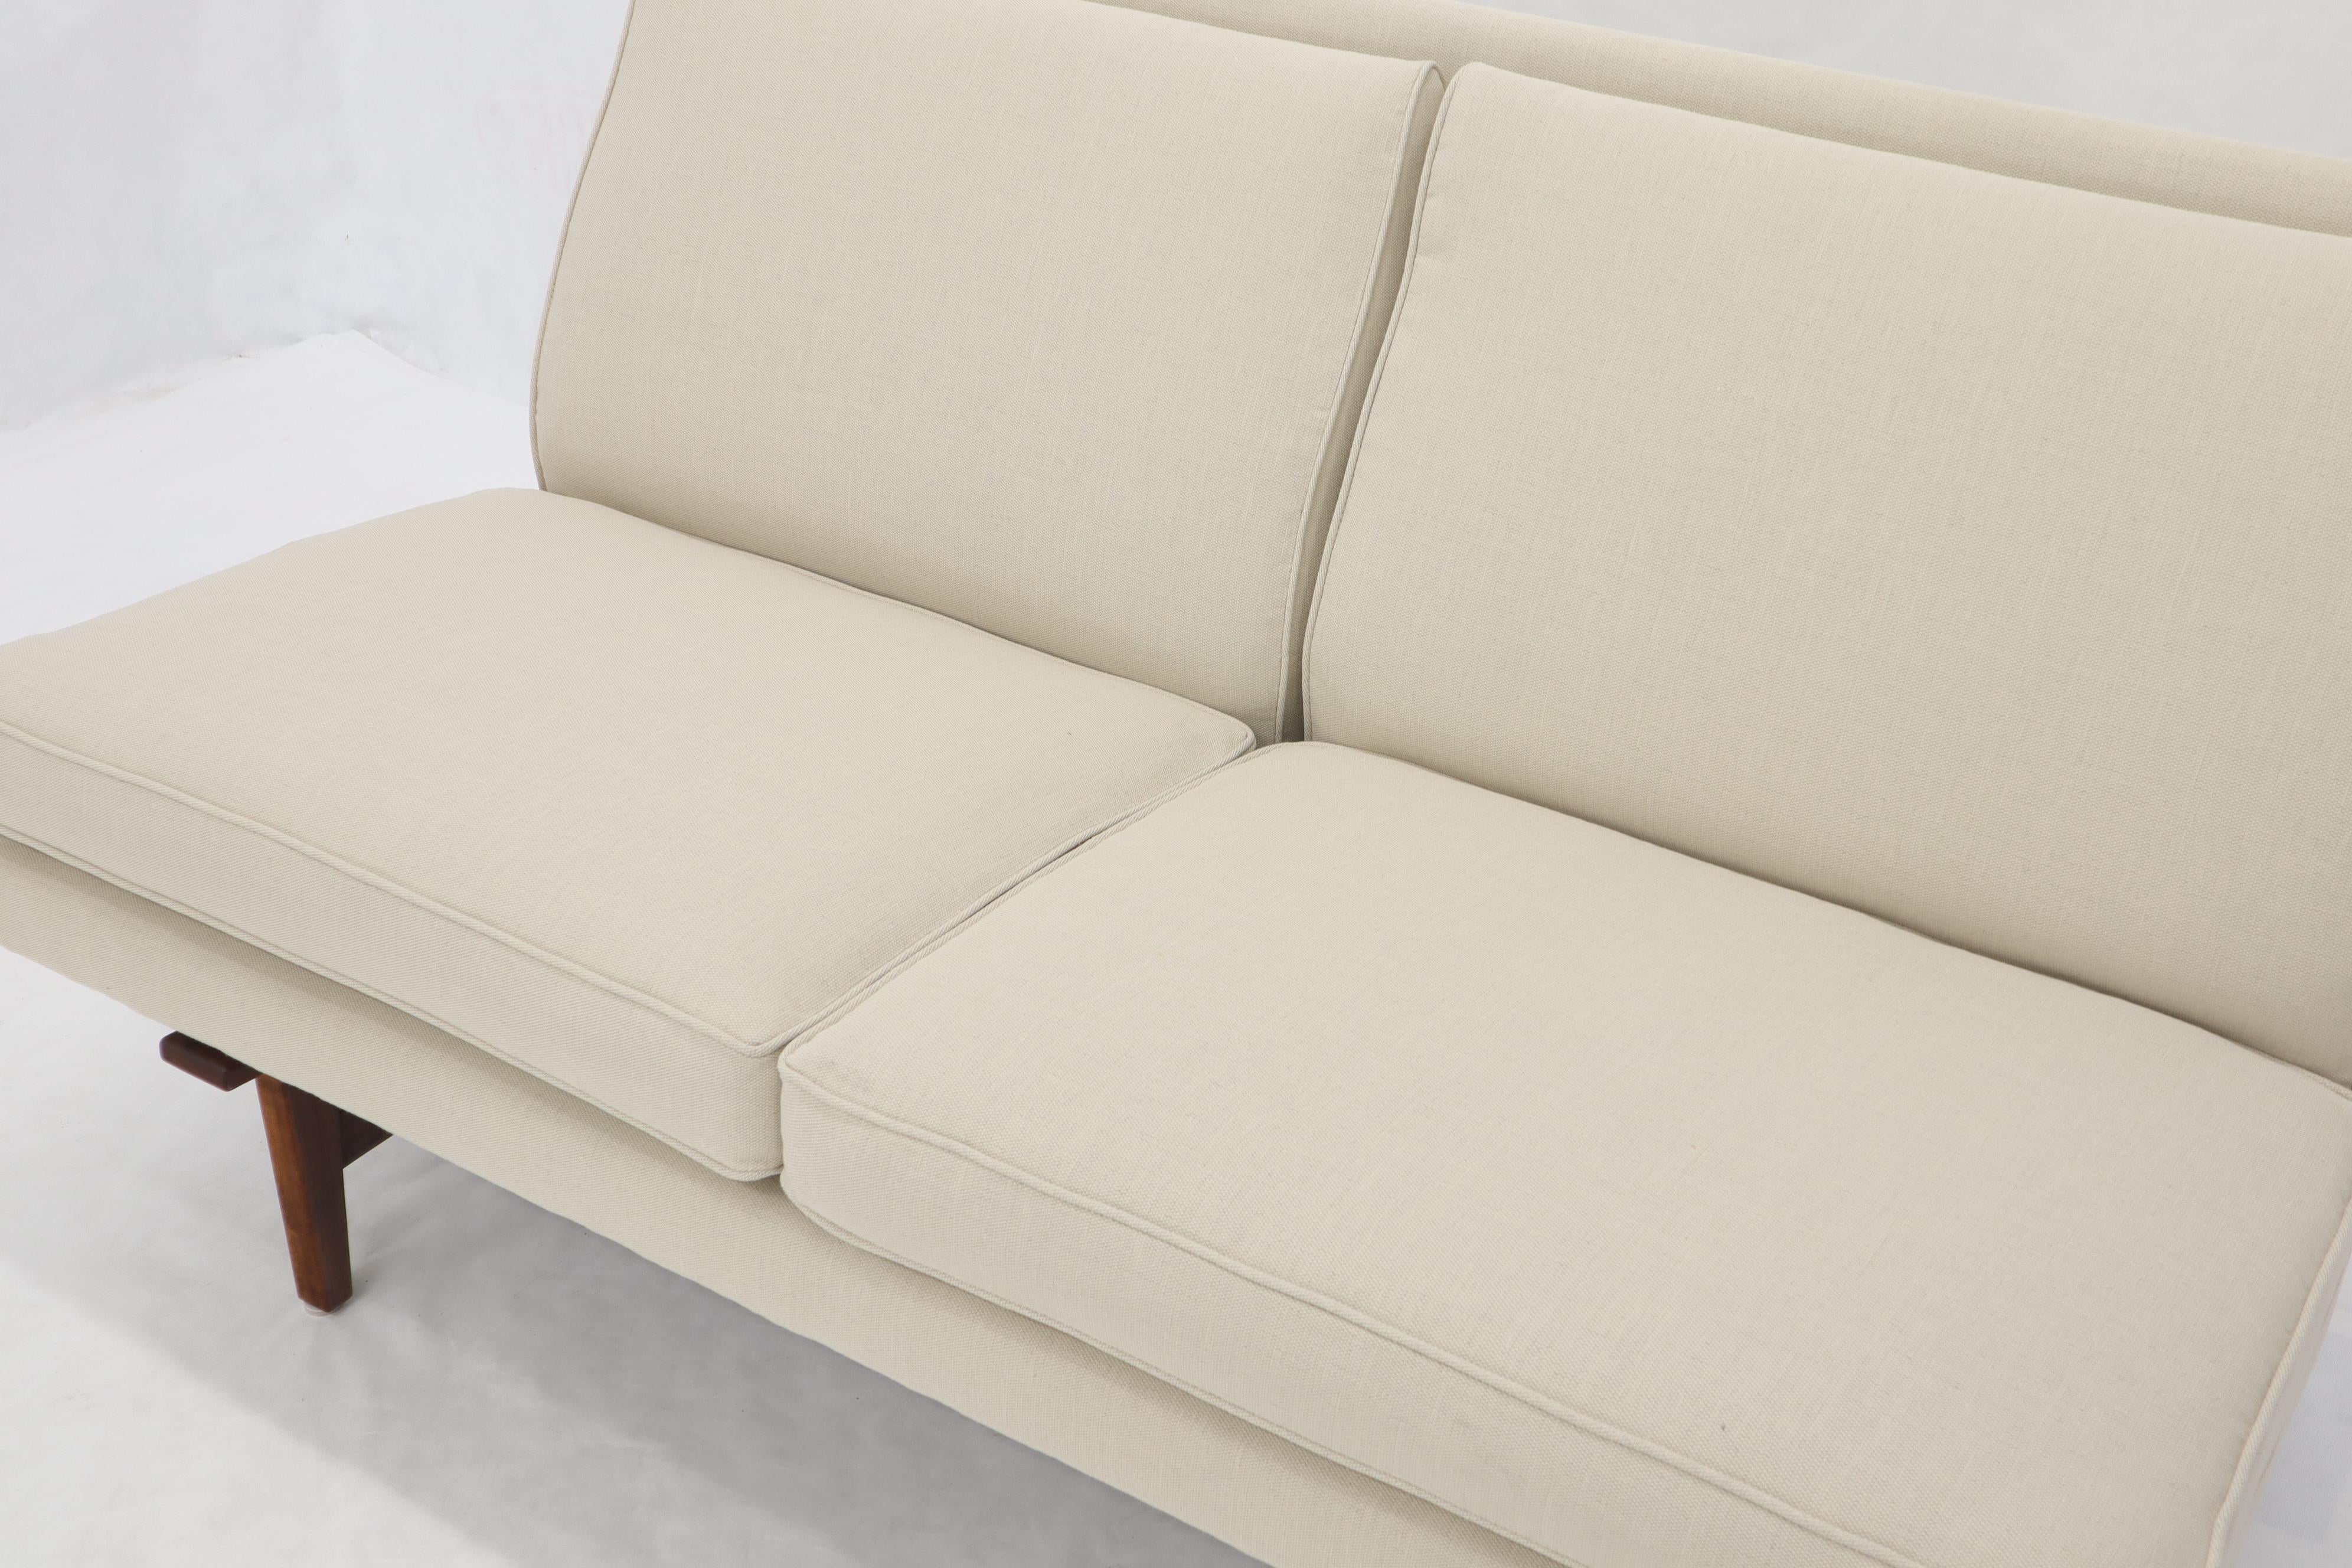 Jens Risom New Canval like Upholstery Loveseat Sofa by Jens Risom 4